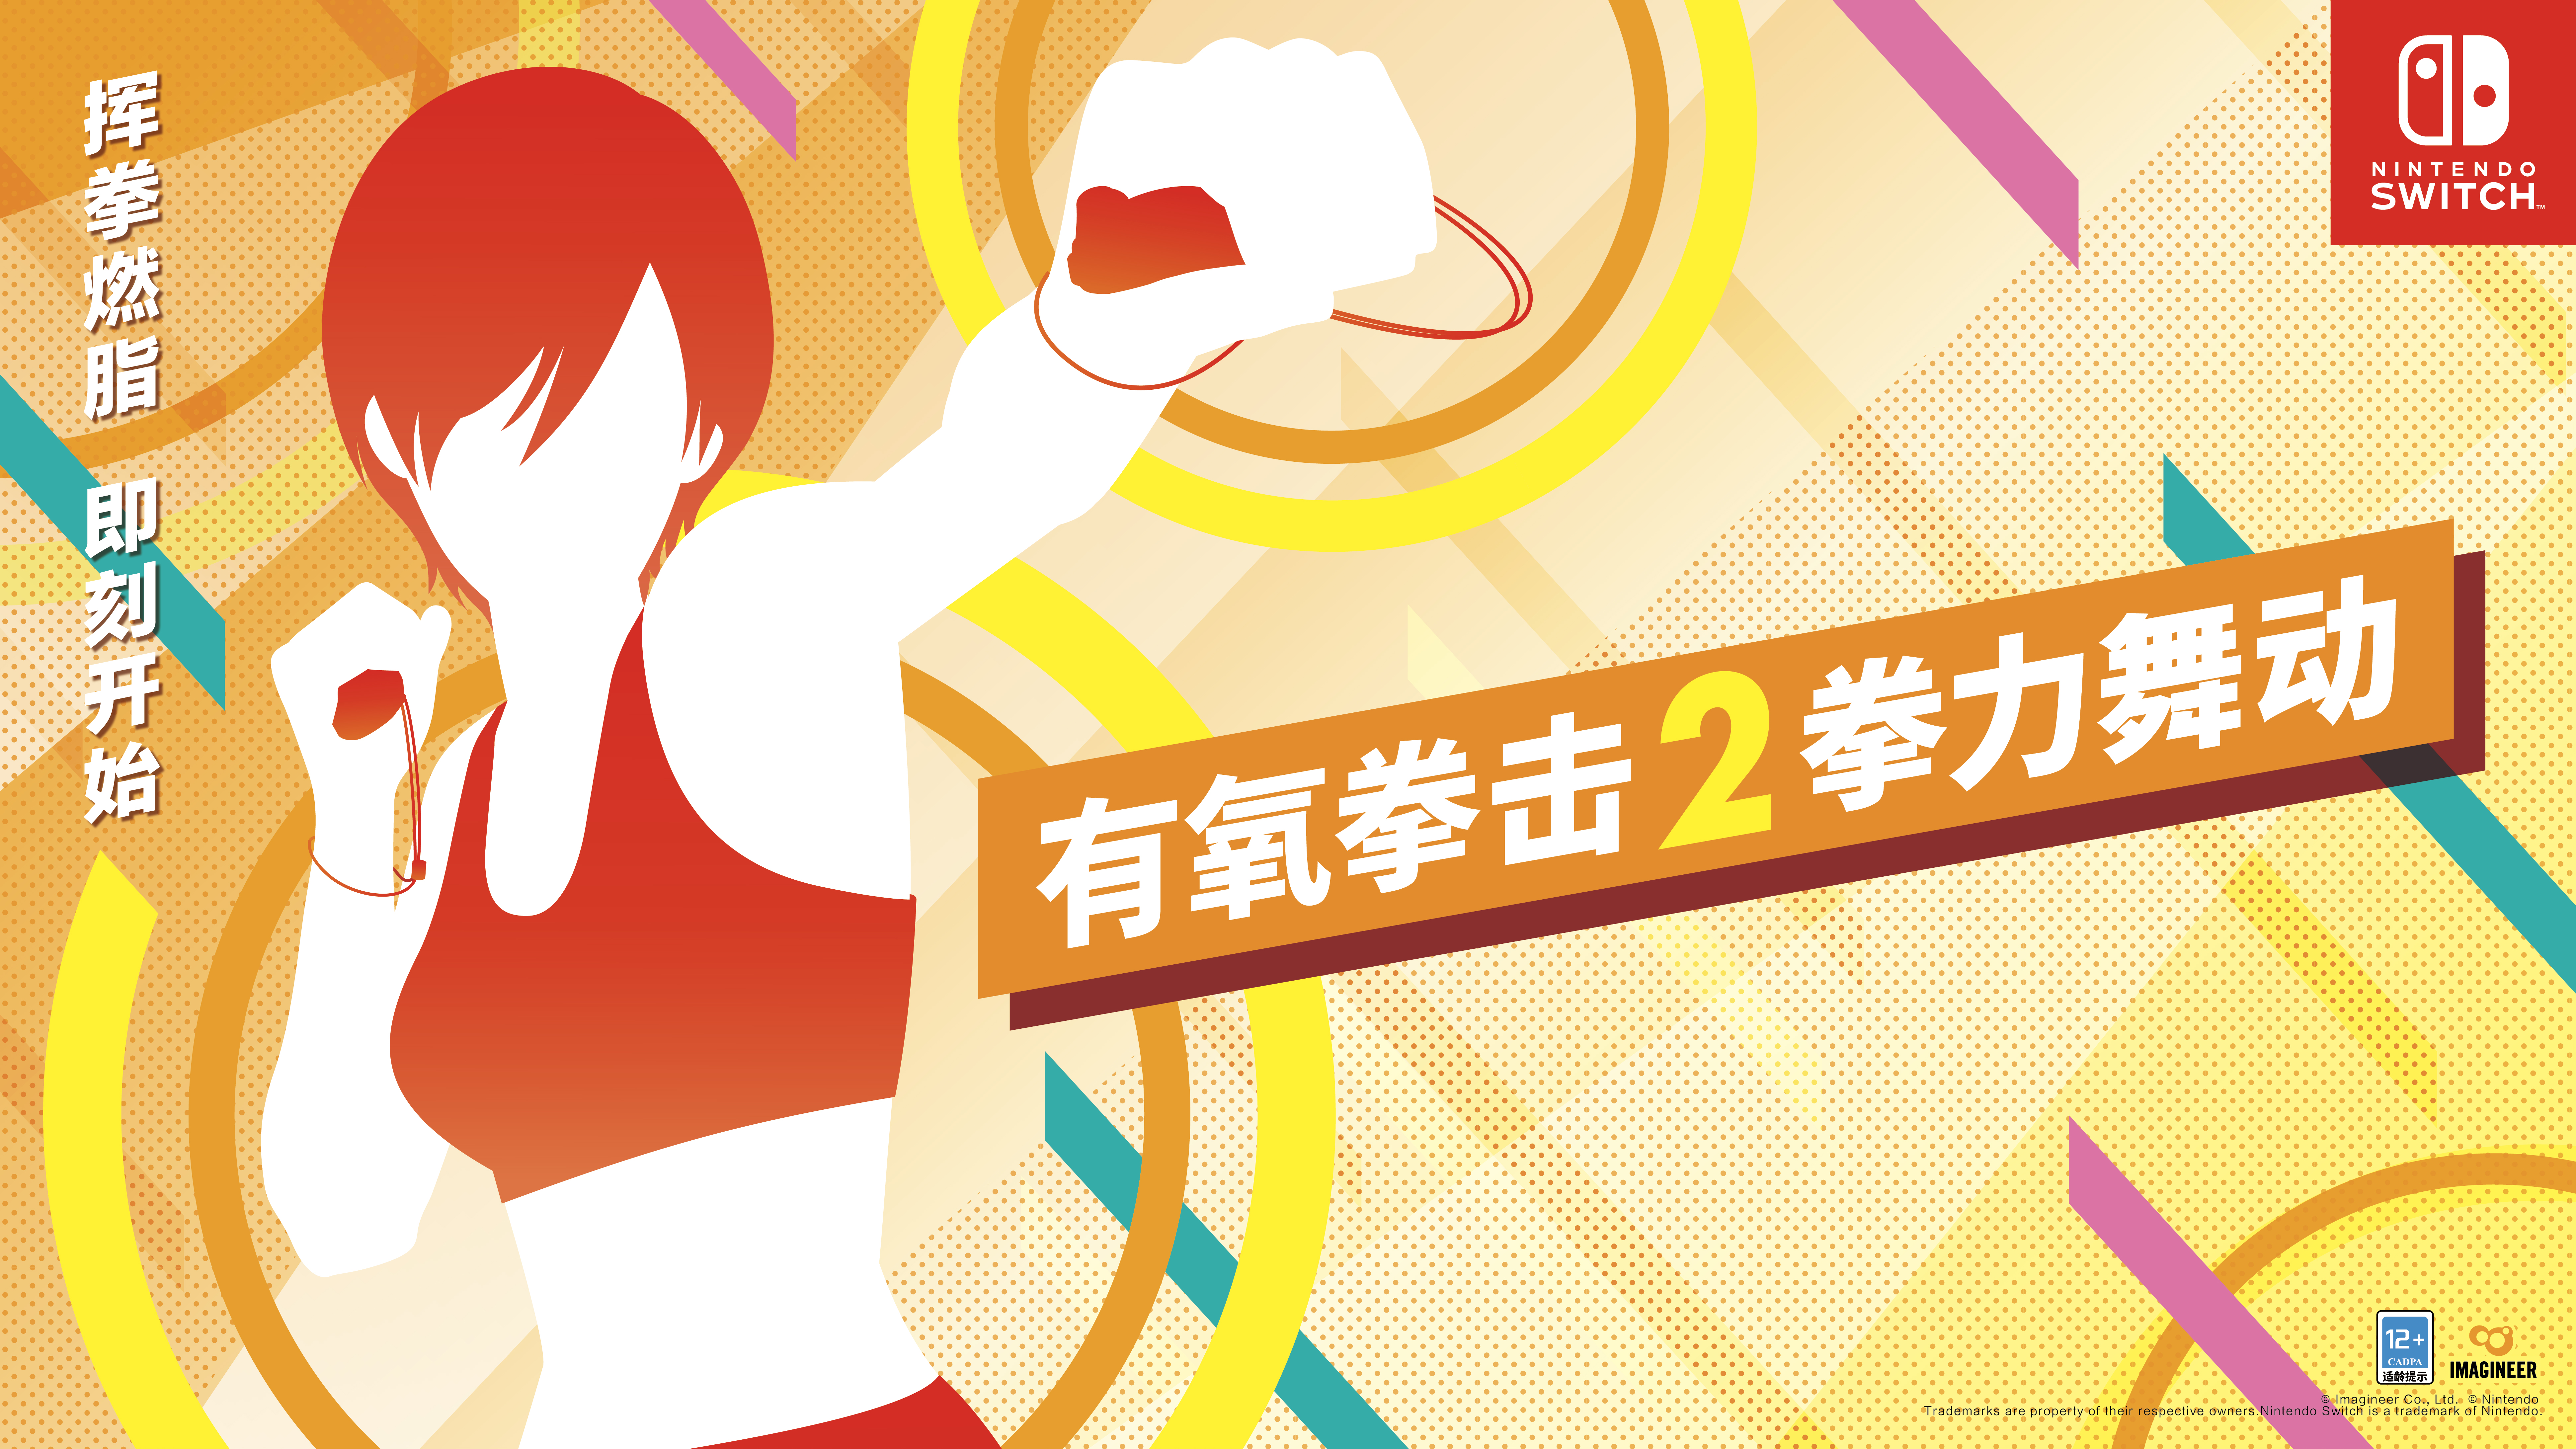 Nintendo Switch ソフト「Fit Boxing 2」中国版「有氧拳击2拳力舞动」販売開始のお知らせ1